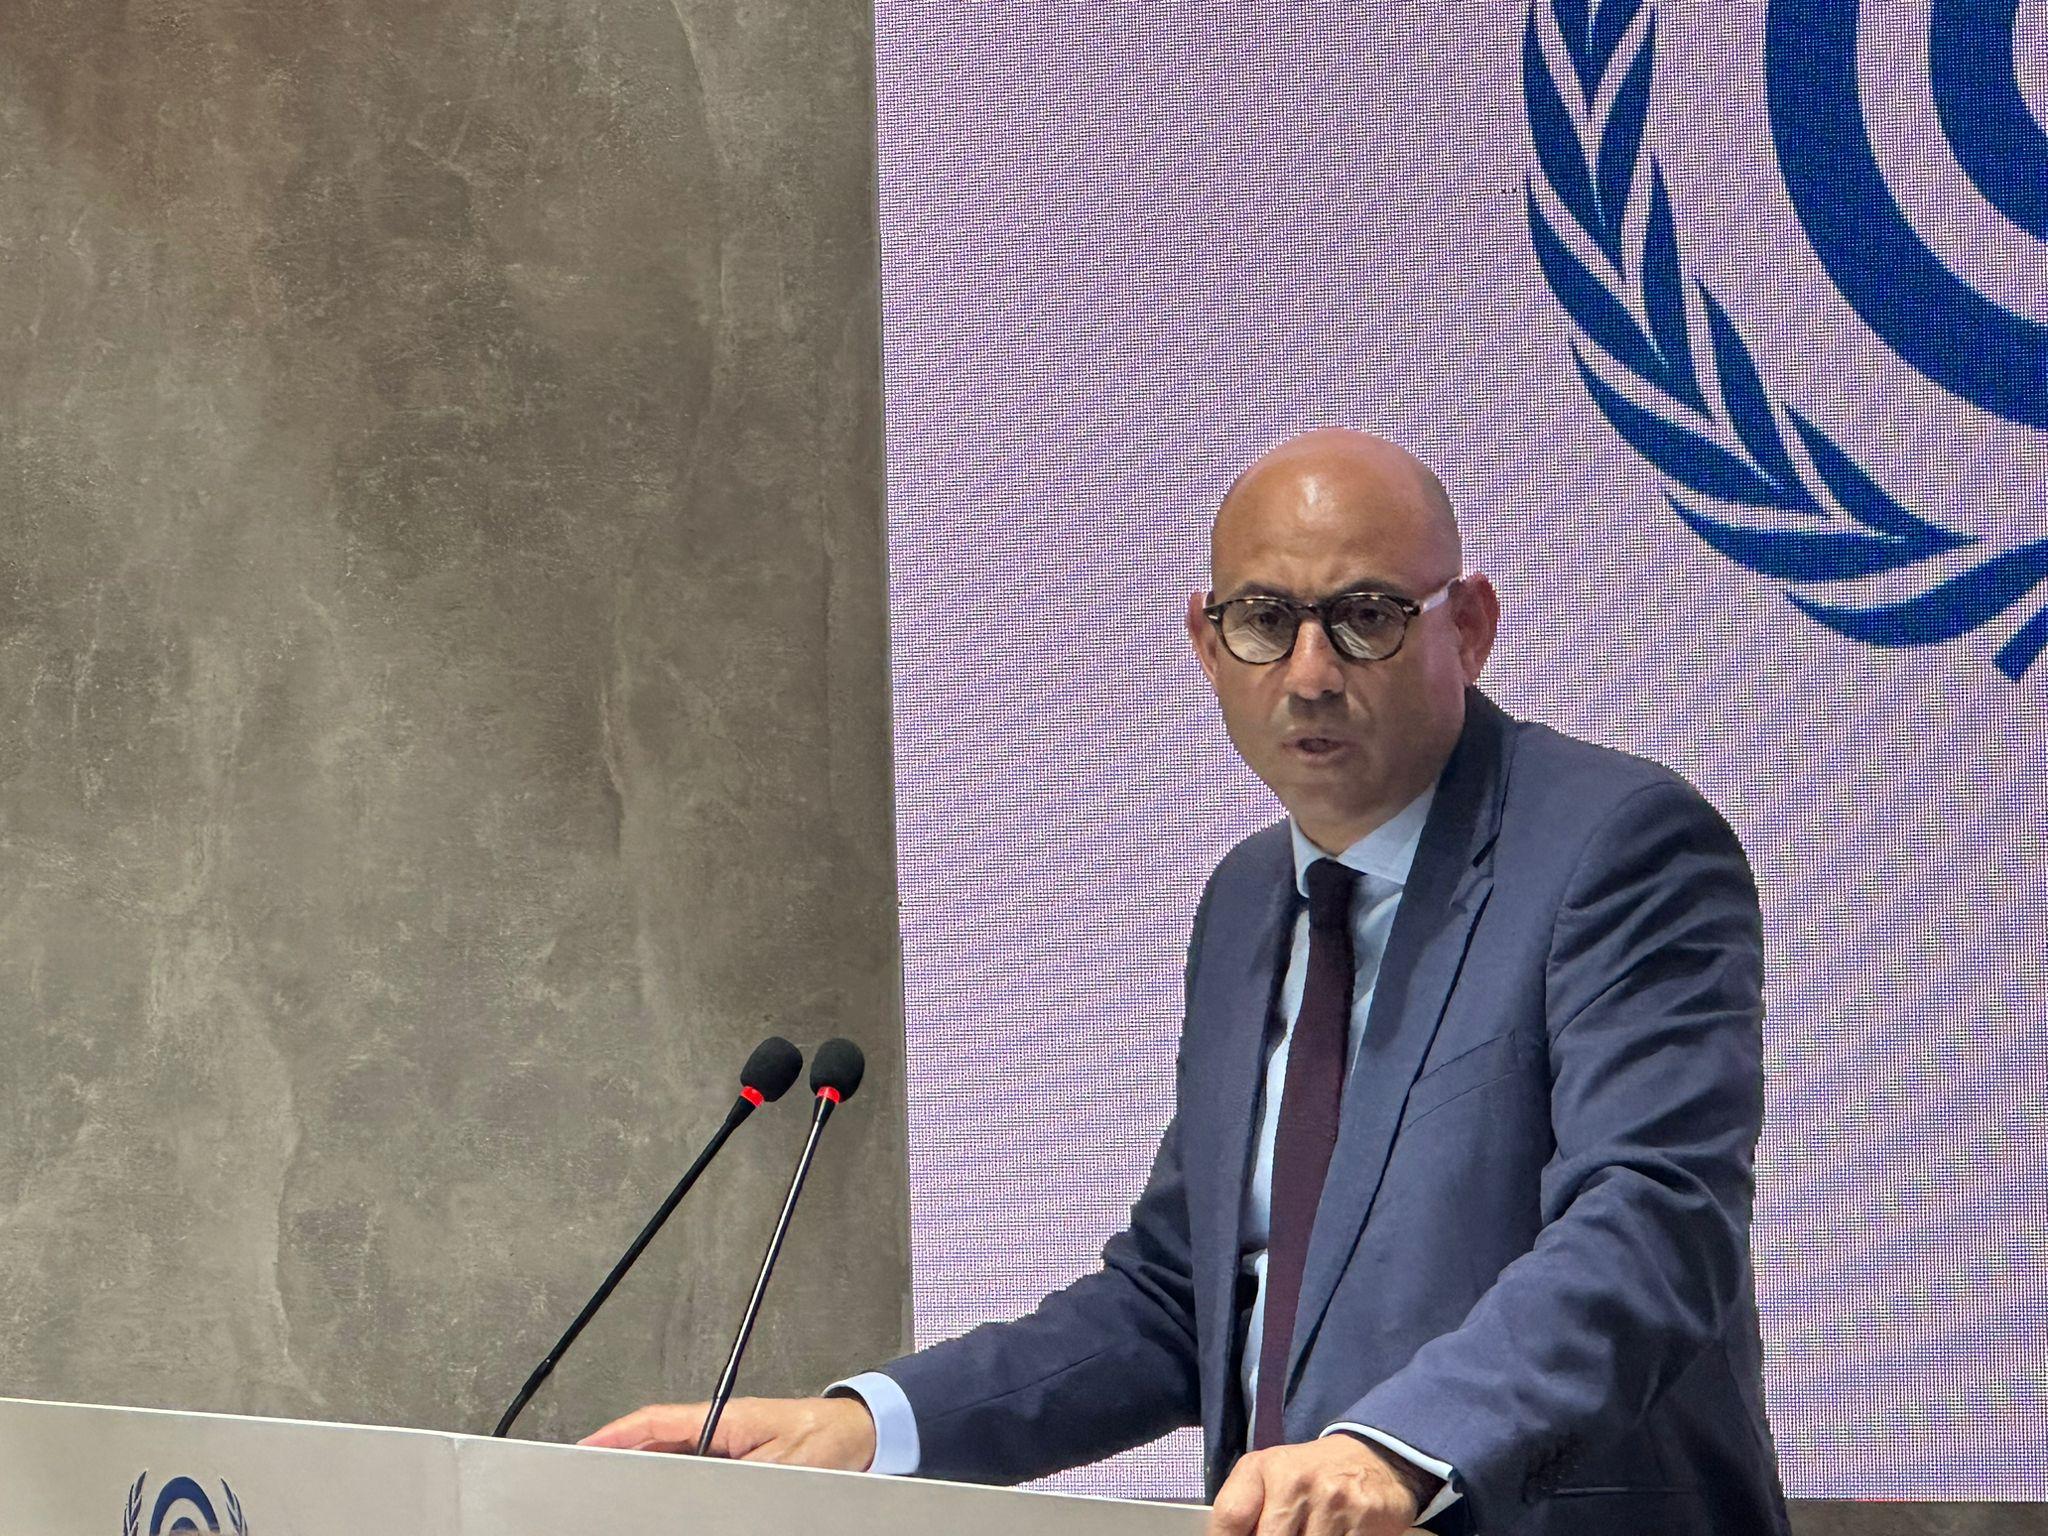 Executive Secretary of the UNFCCC, Simon Stiell